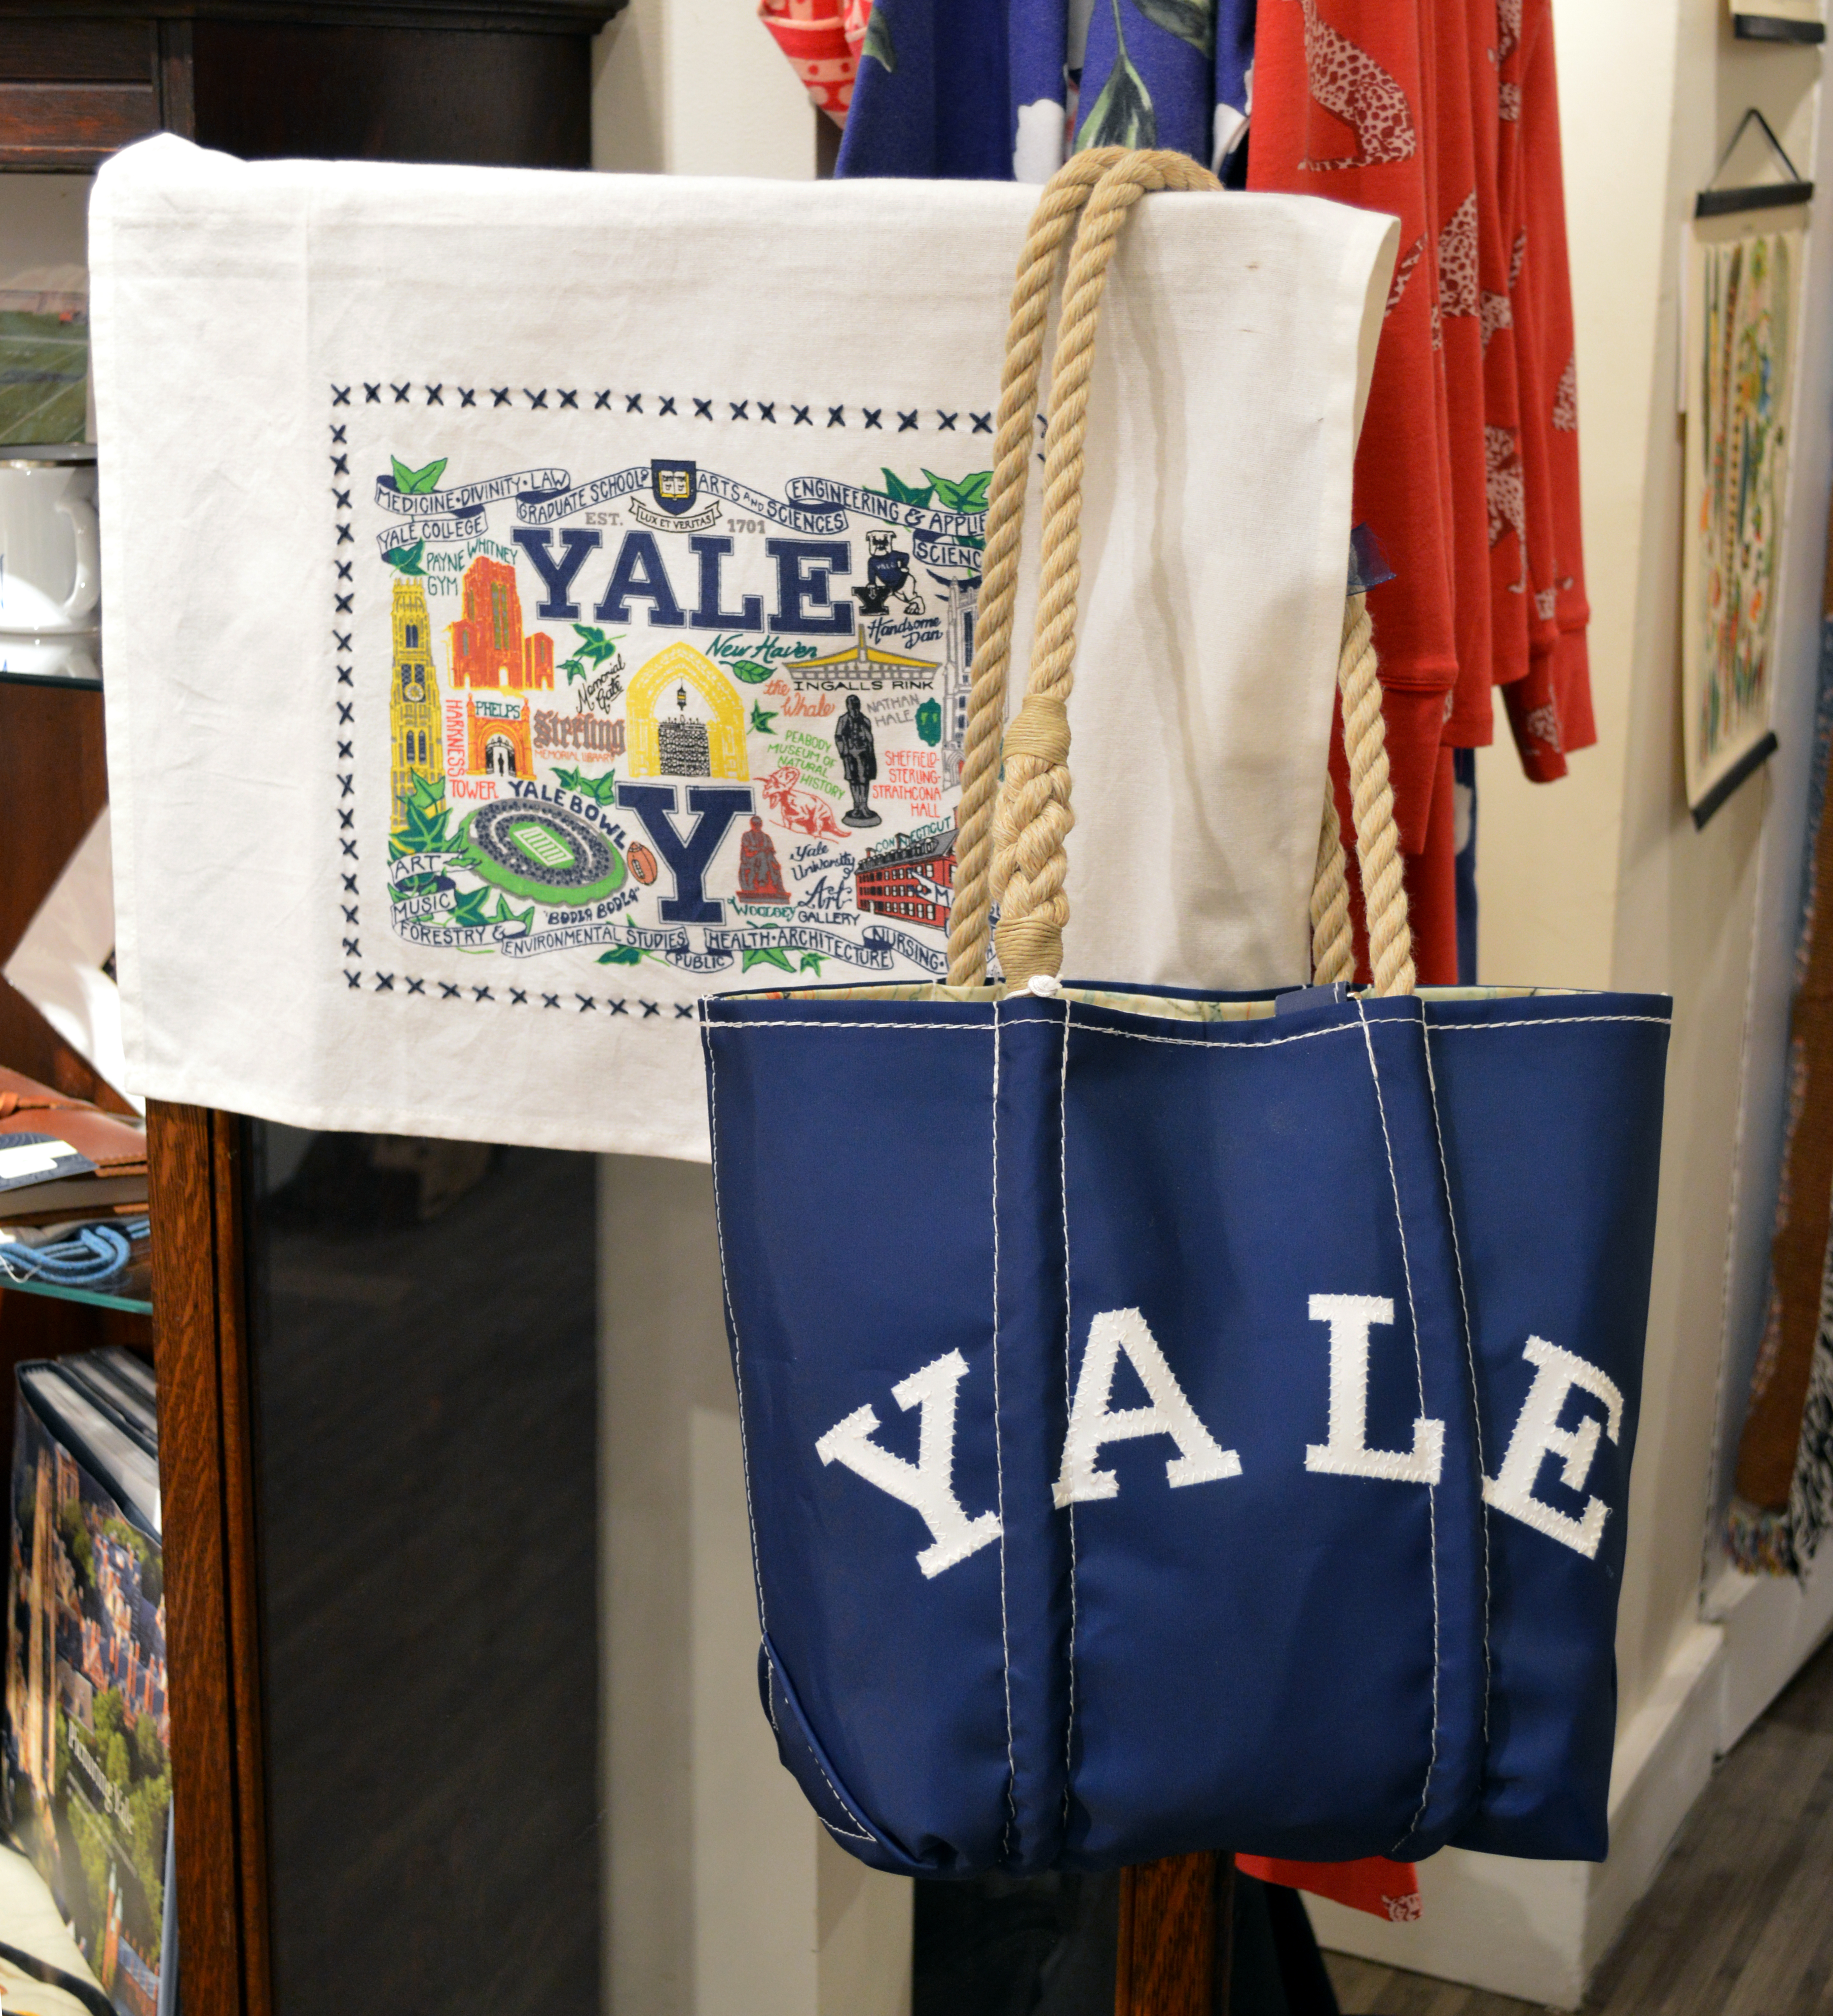 Yale tea towel and Yale sail cloth bag